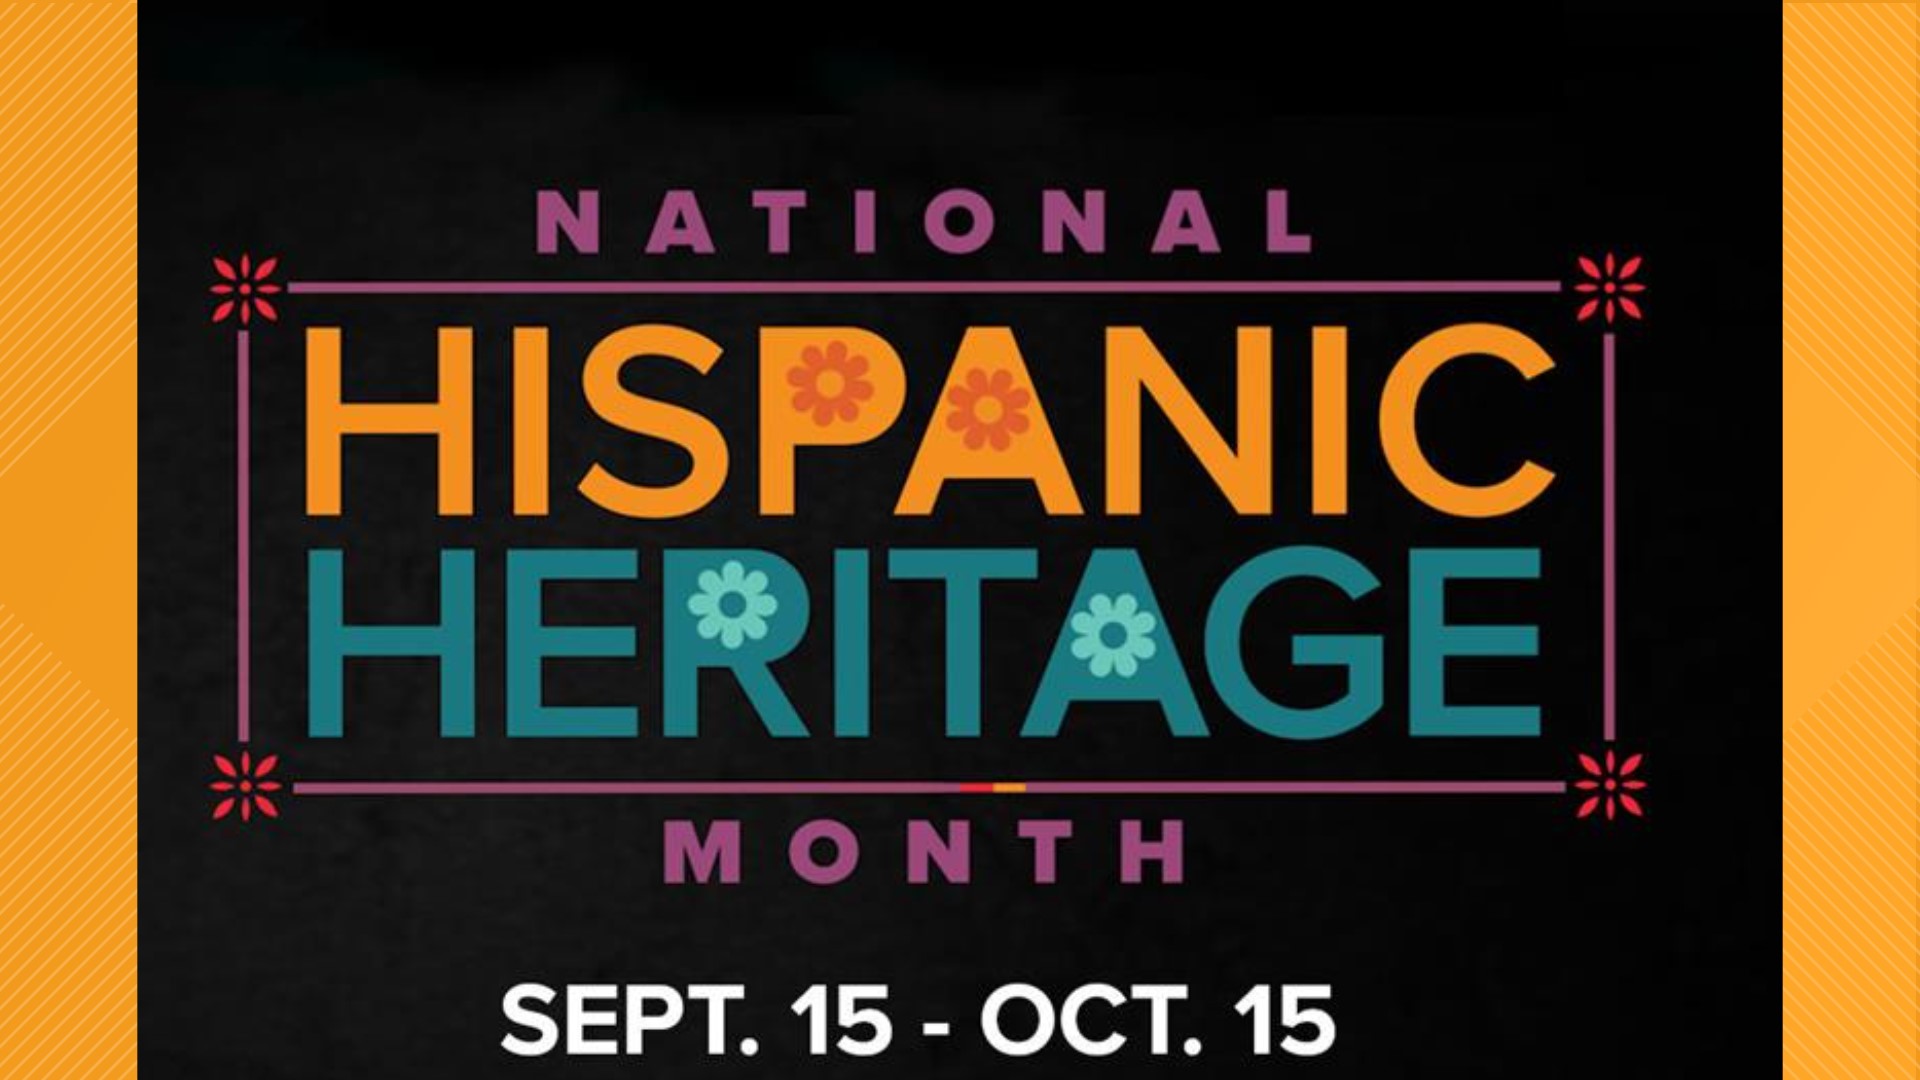 Hispanic Heritage Night on September 24 features Valenzuela T